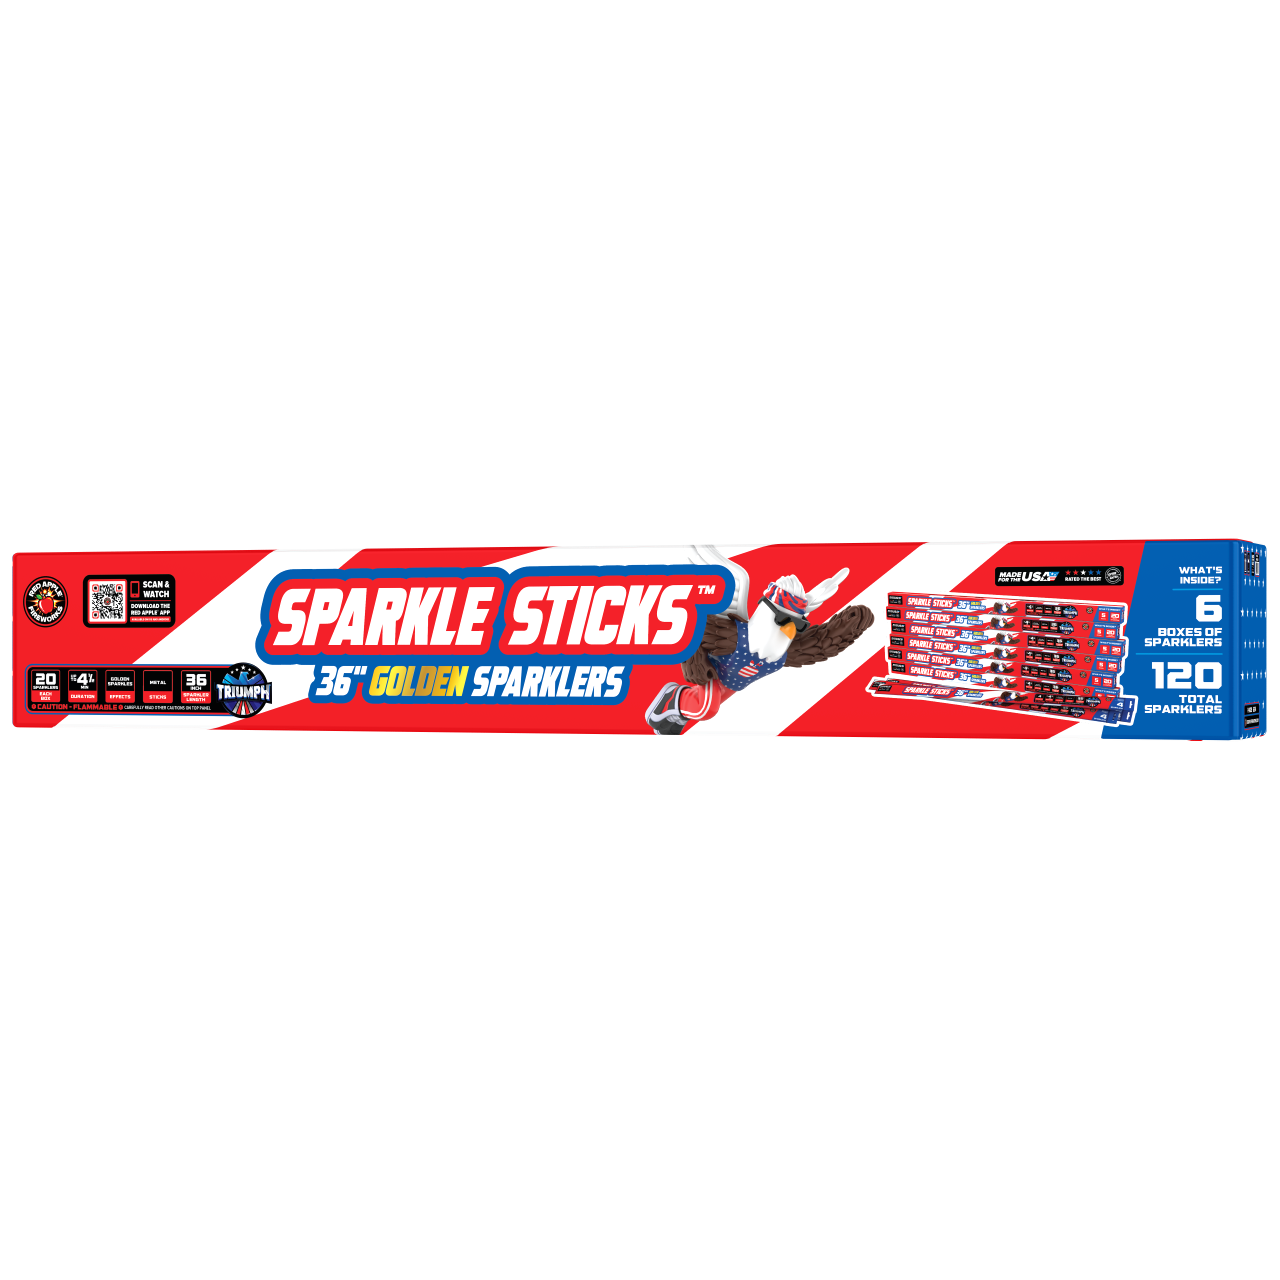 Sparkle Sticks™ 36 Inch Metal Sparklers